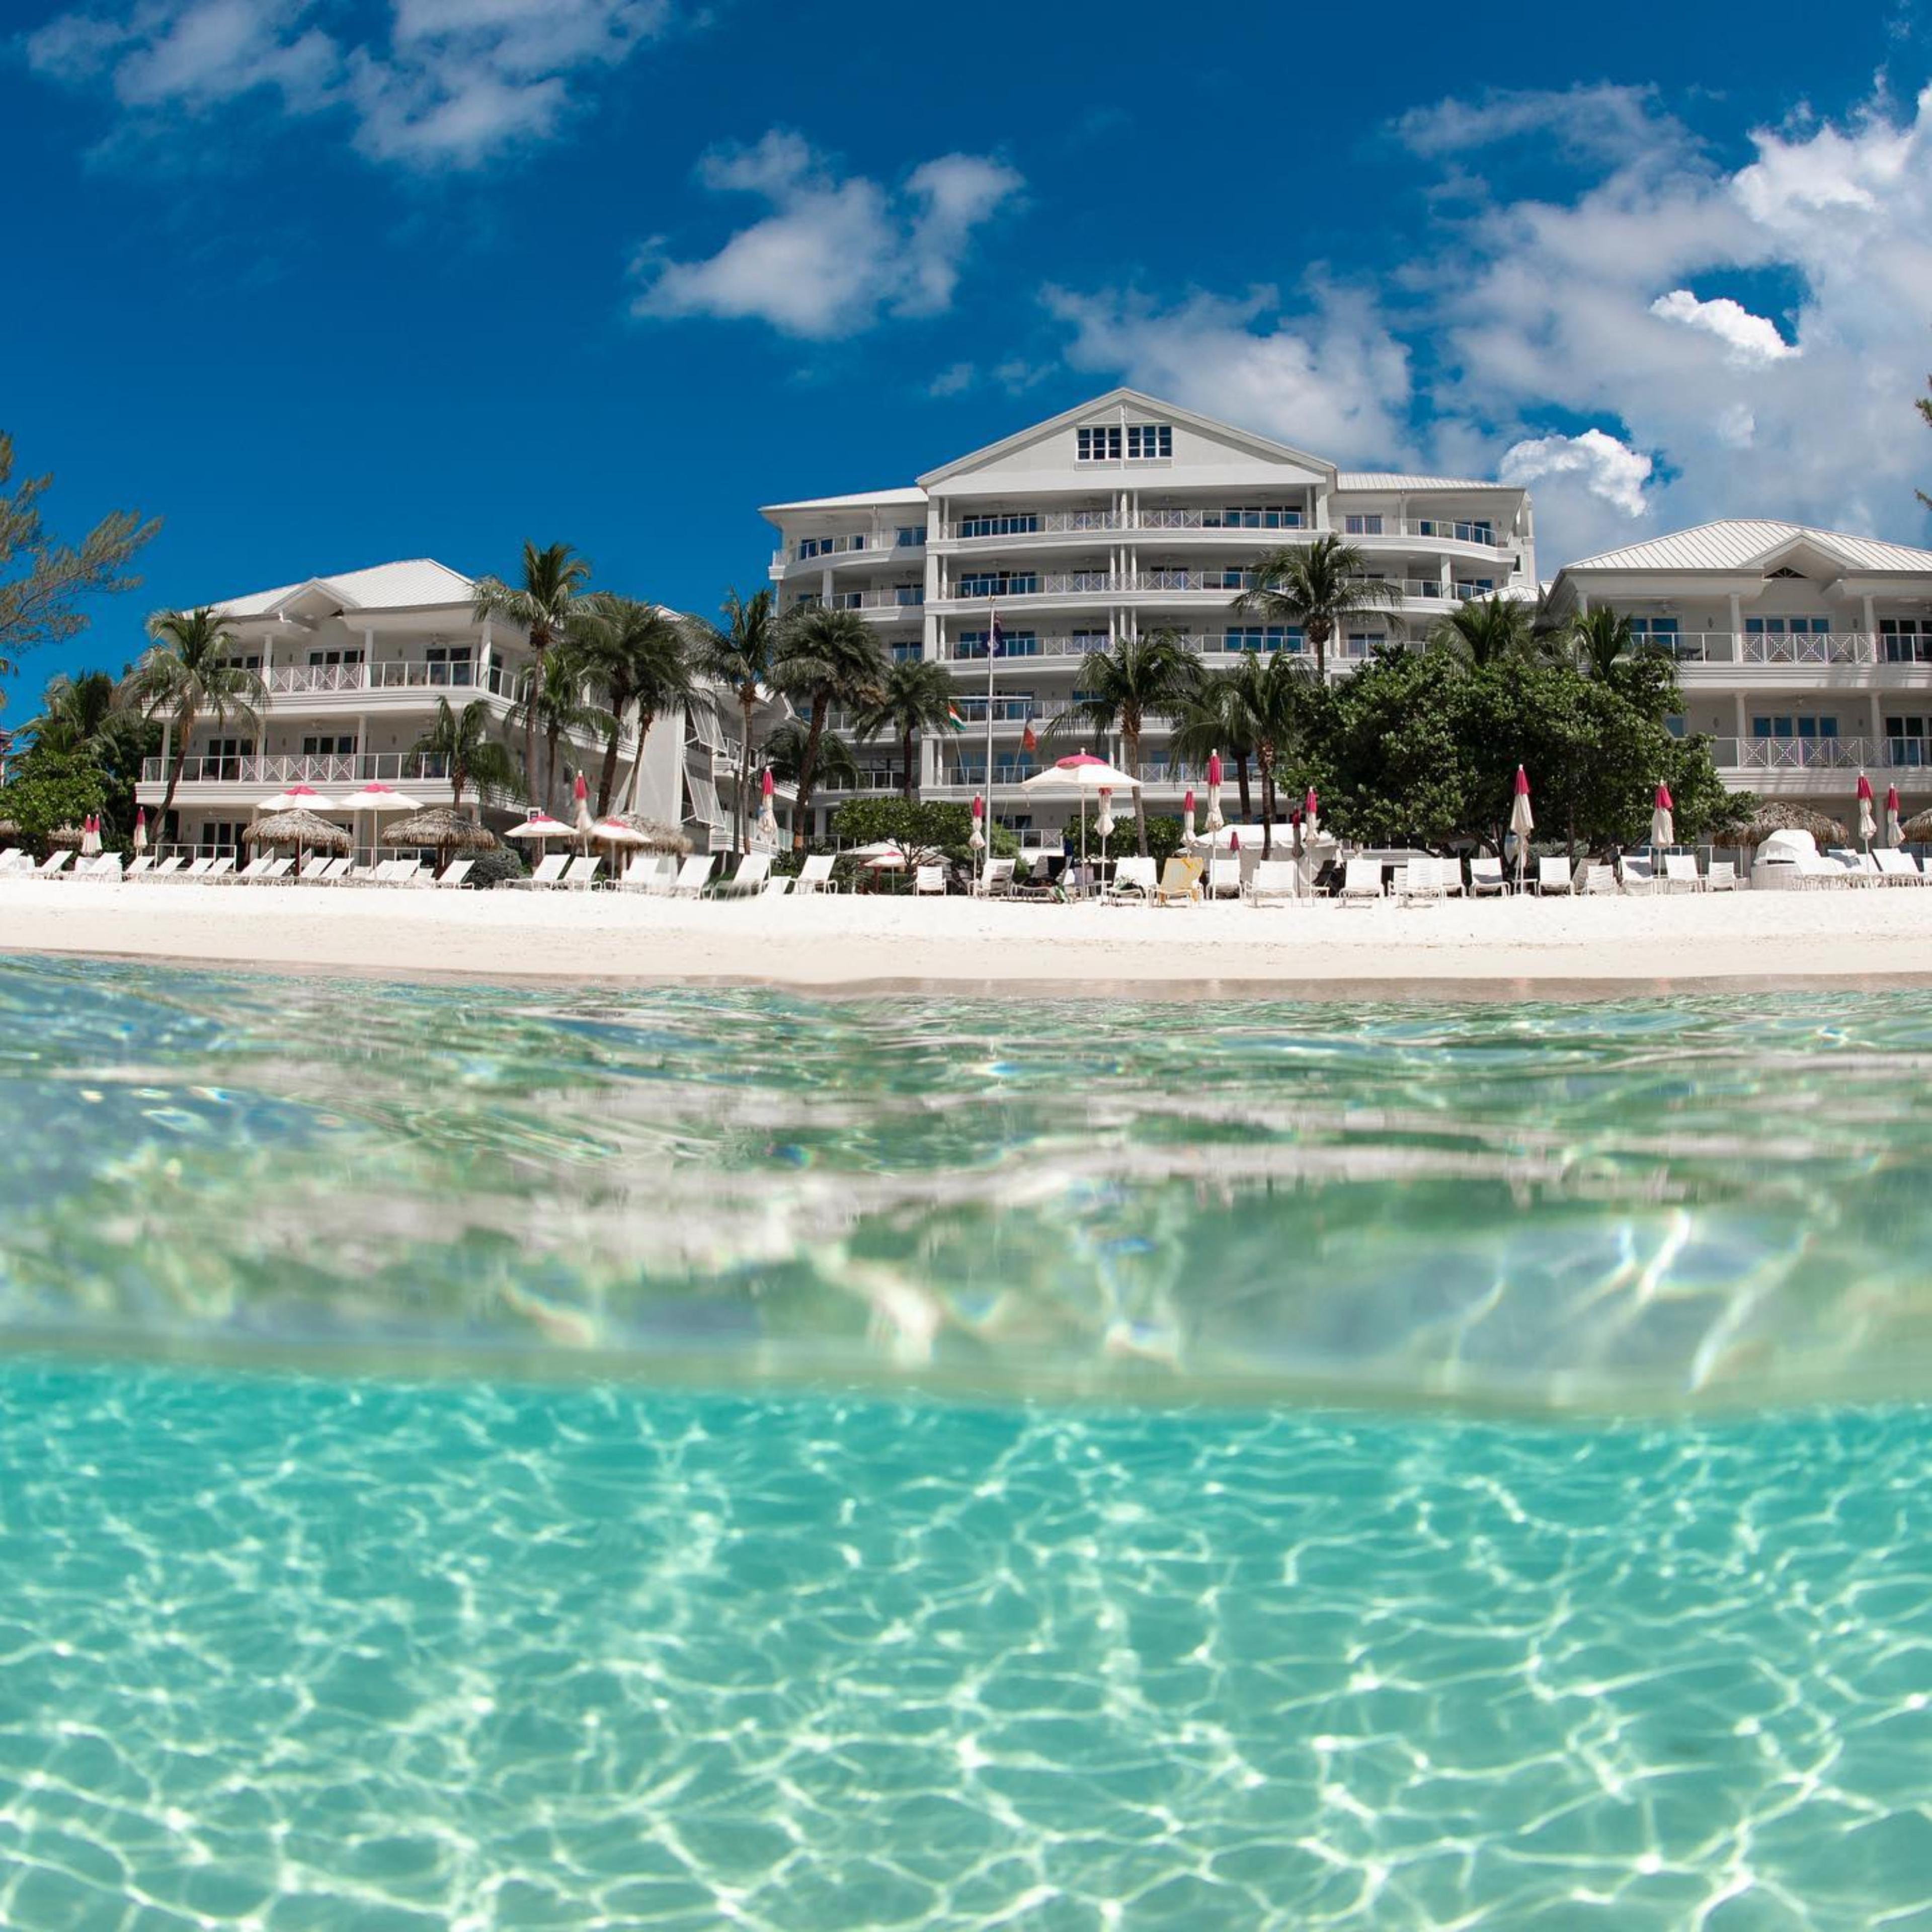 Caribbean Club Boutique Residence Hotel - Seven Mile Beach, Grand Cayman Island, Cayman Islands